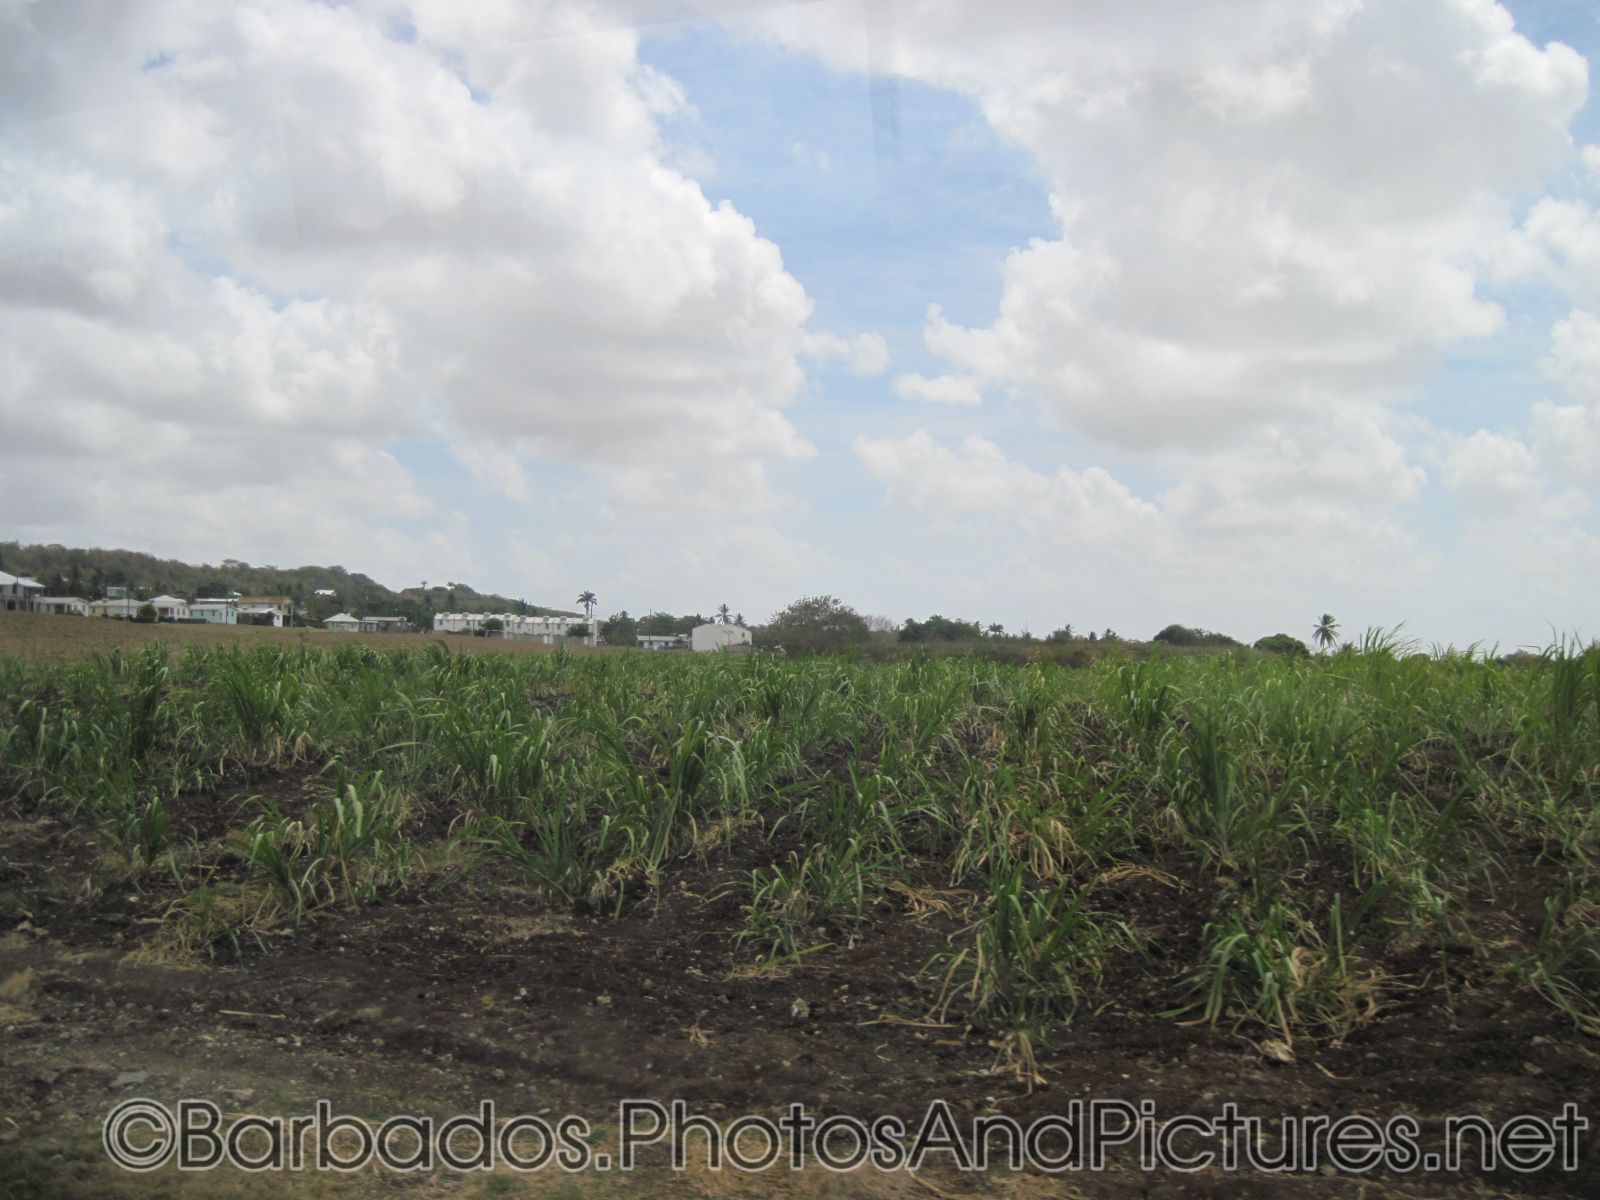 Farm field in Barbados.jpg
